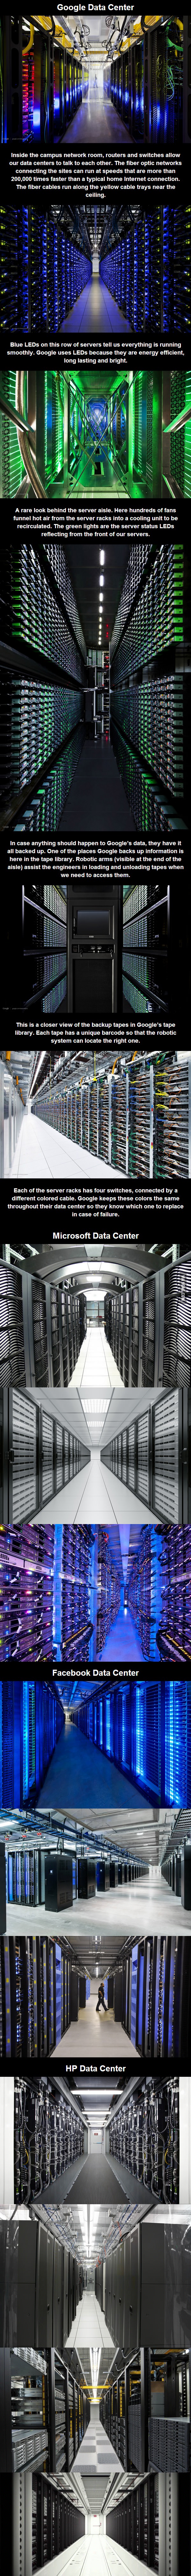 datacenters.jpg